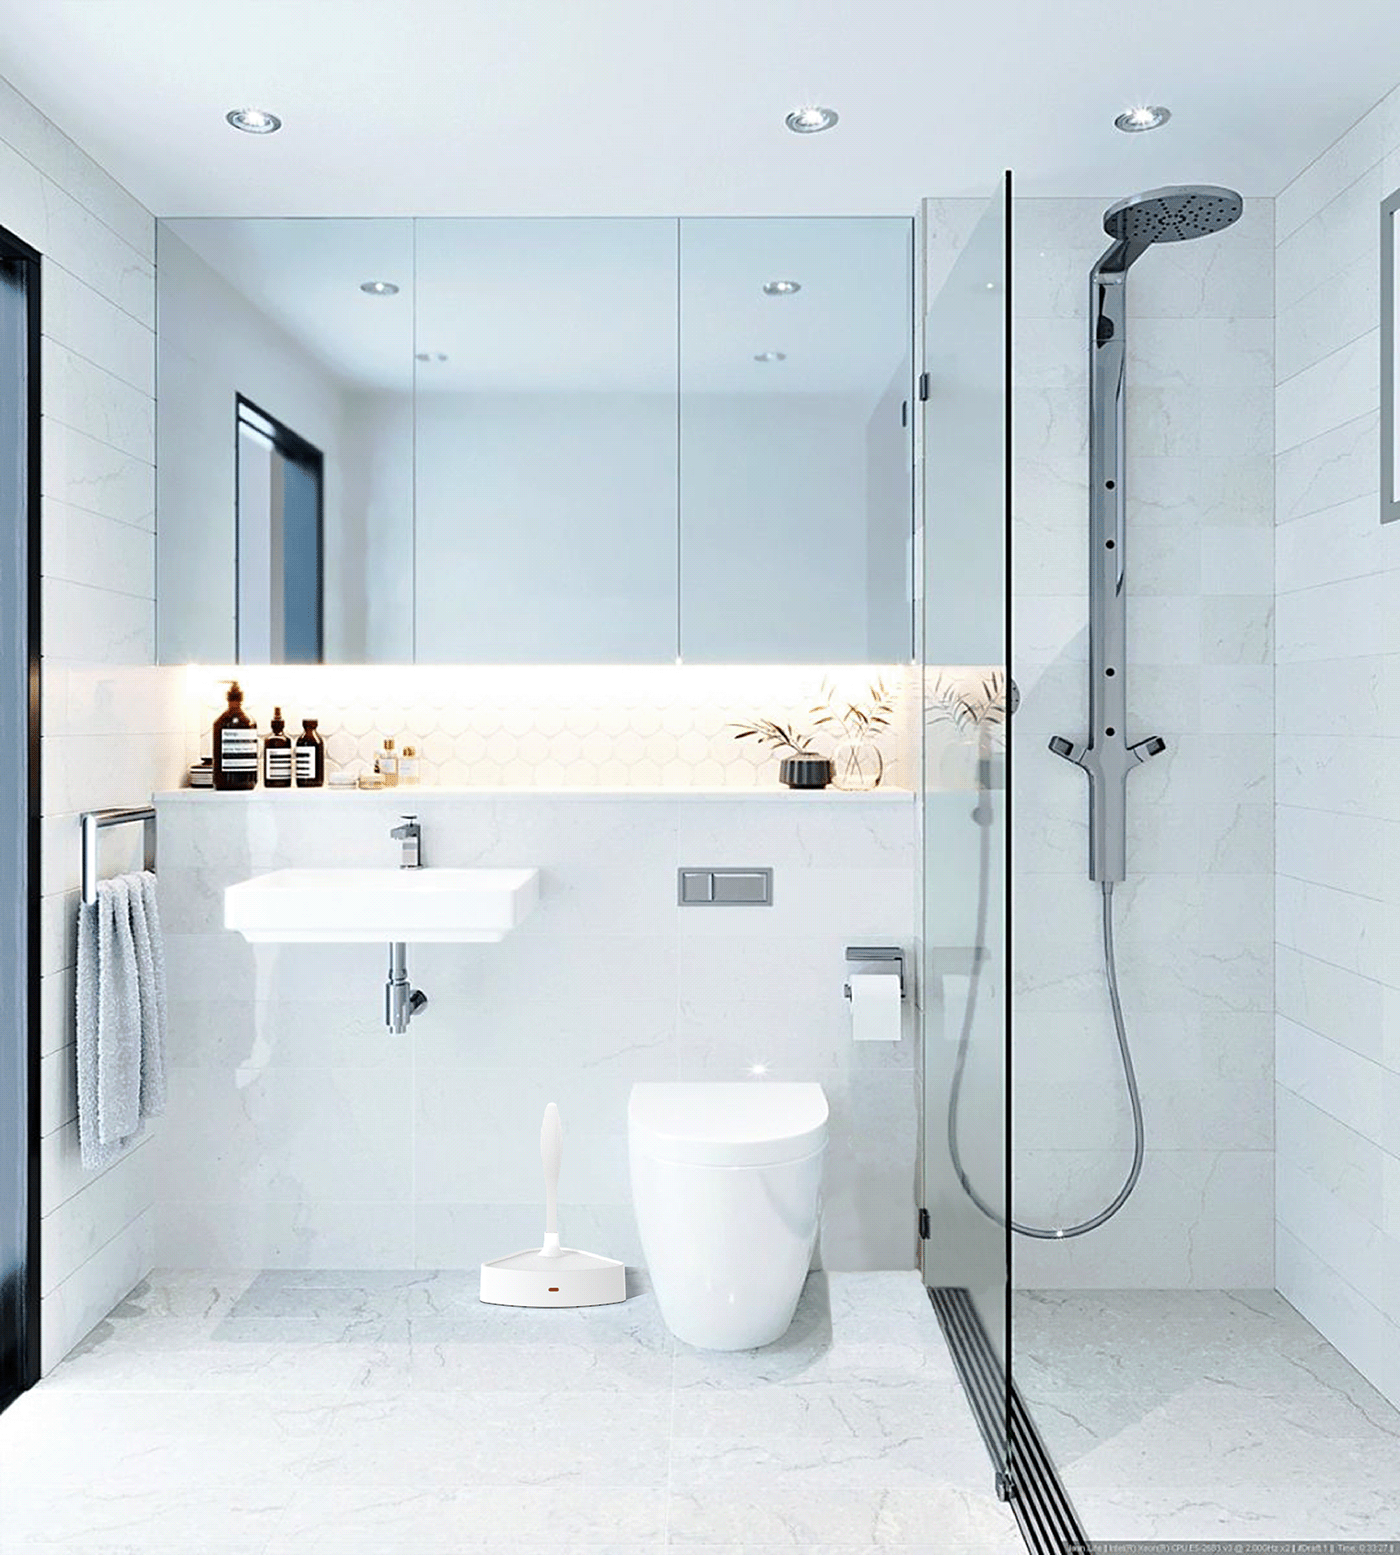 bathroom product design  Product innovation toilet brush